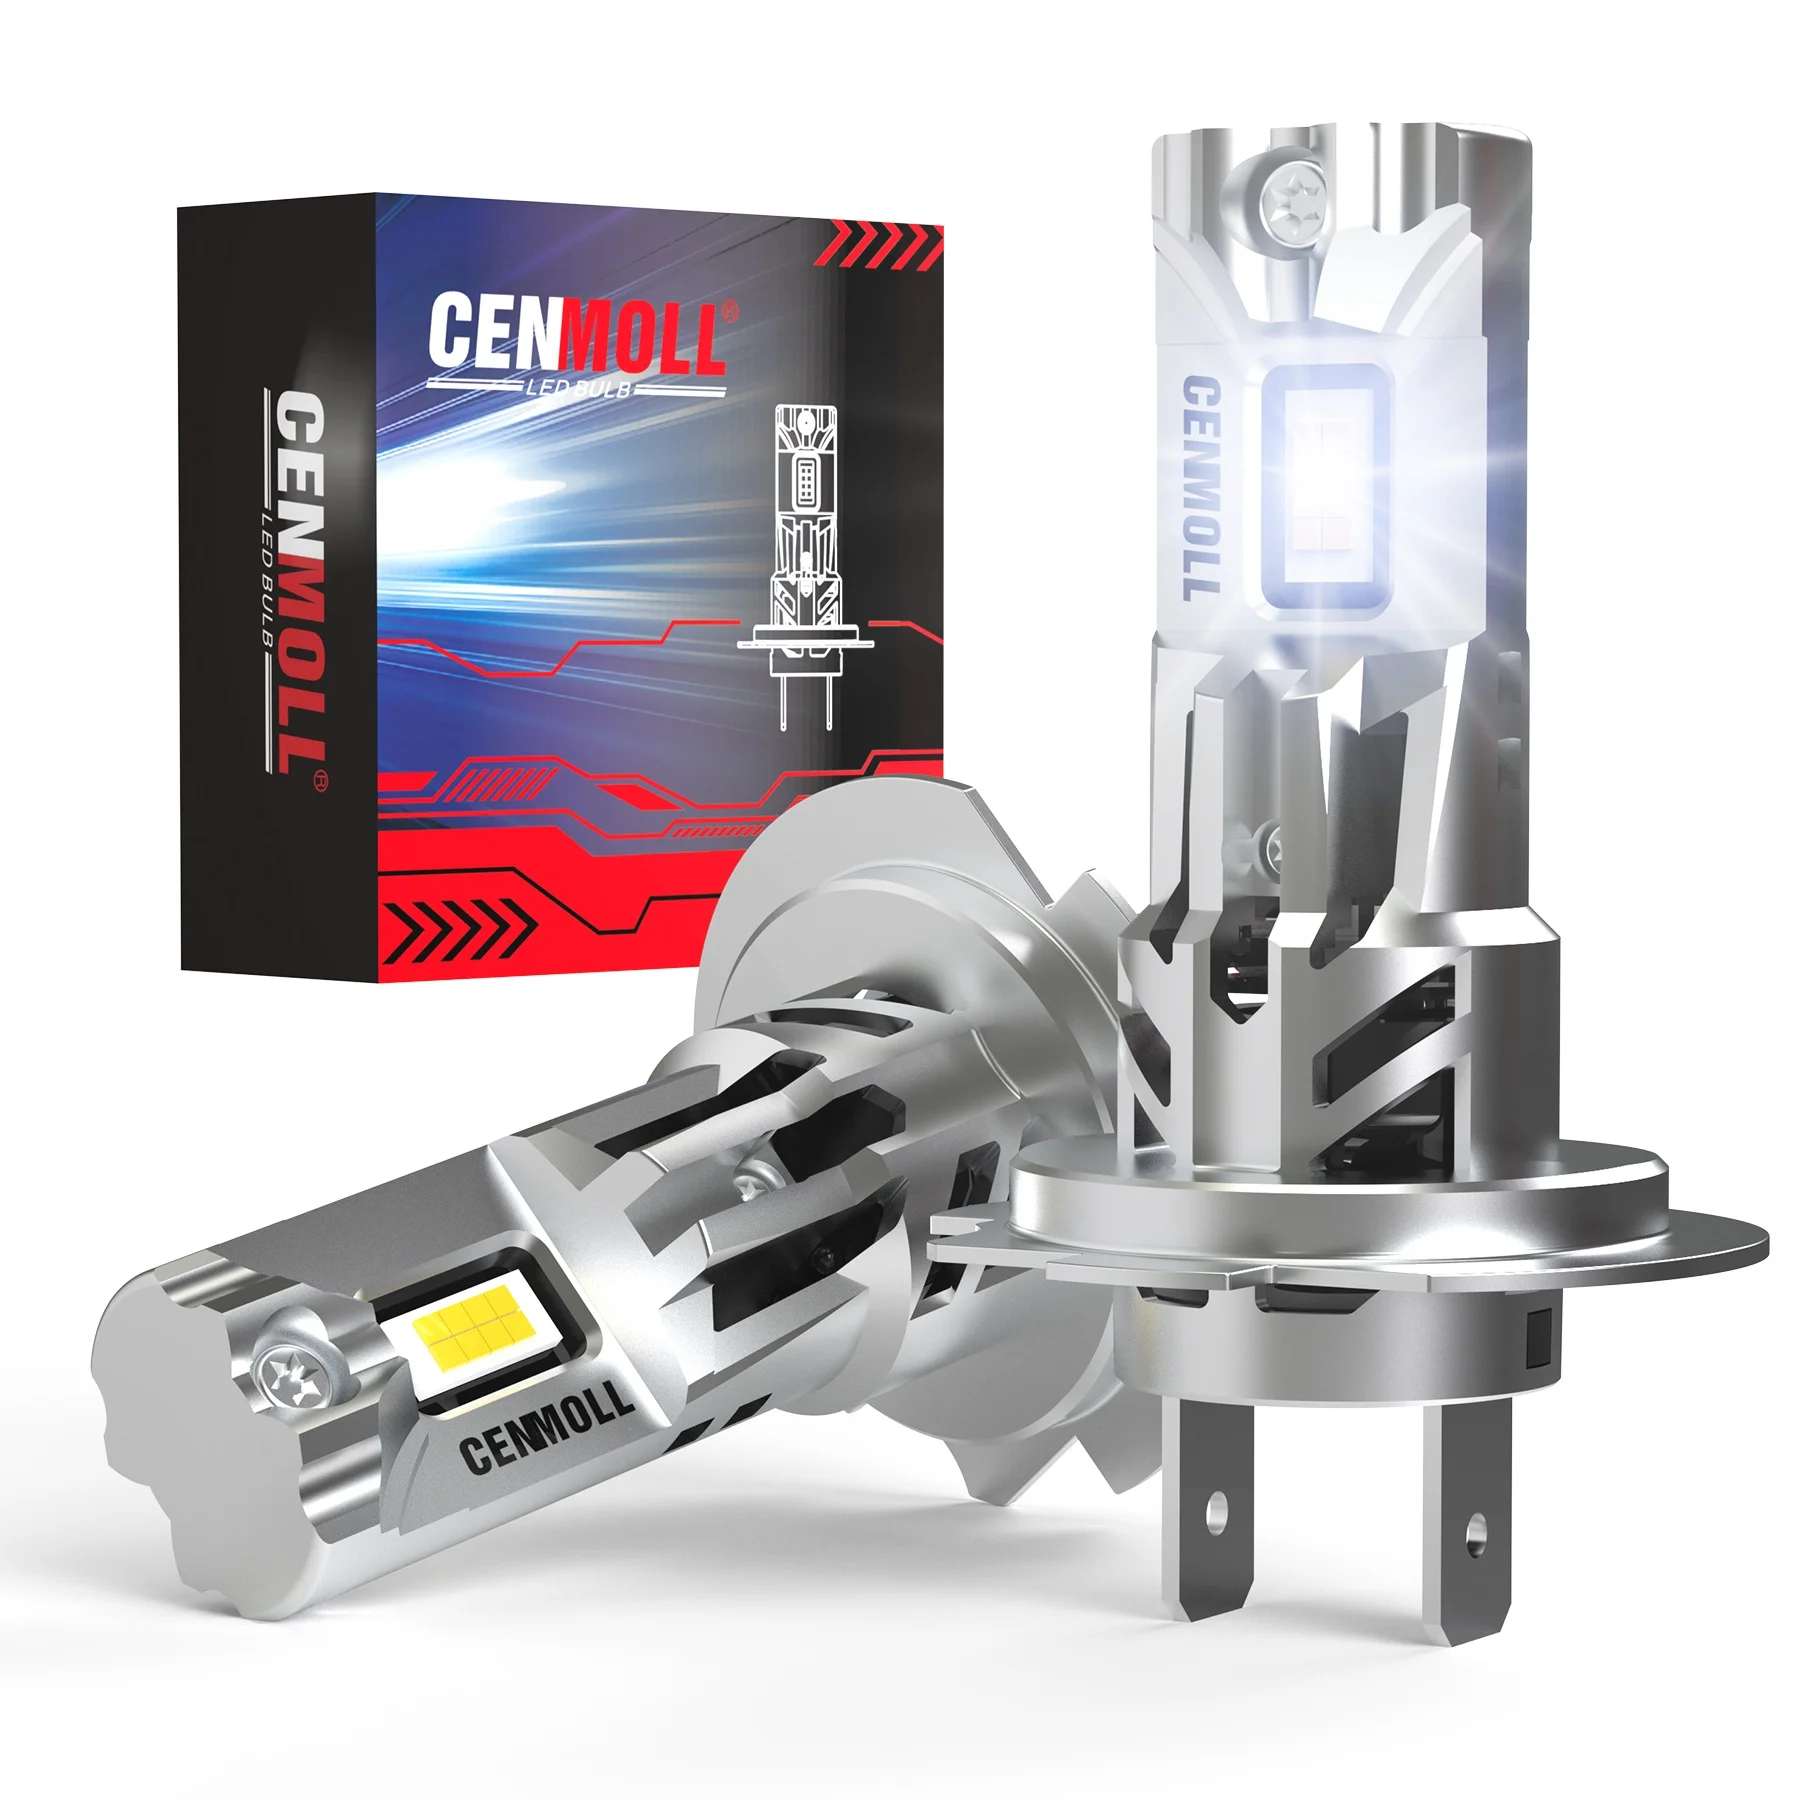  Cenmoll Bombilla LED H4 para faros delanteros, 90 W